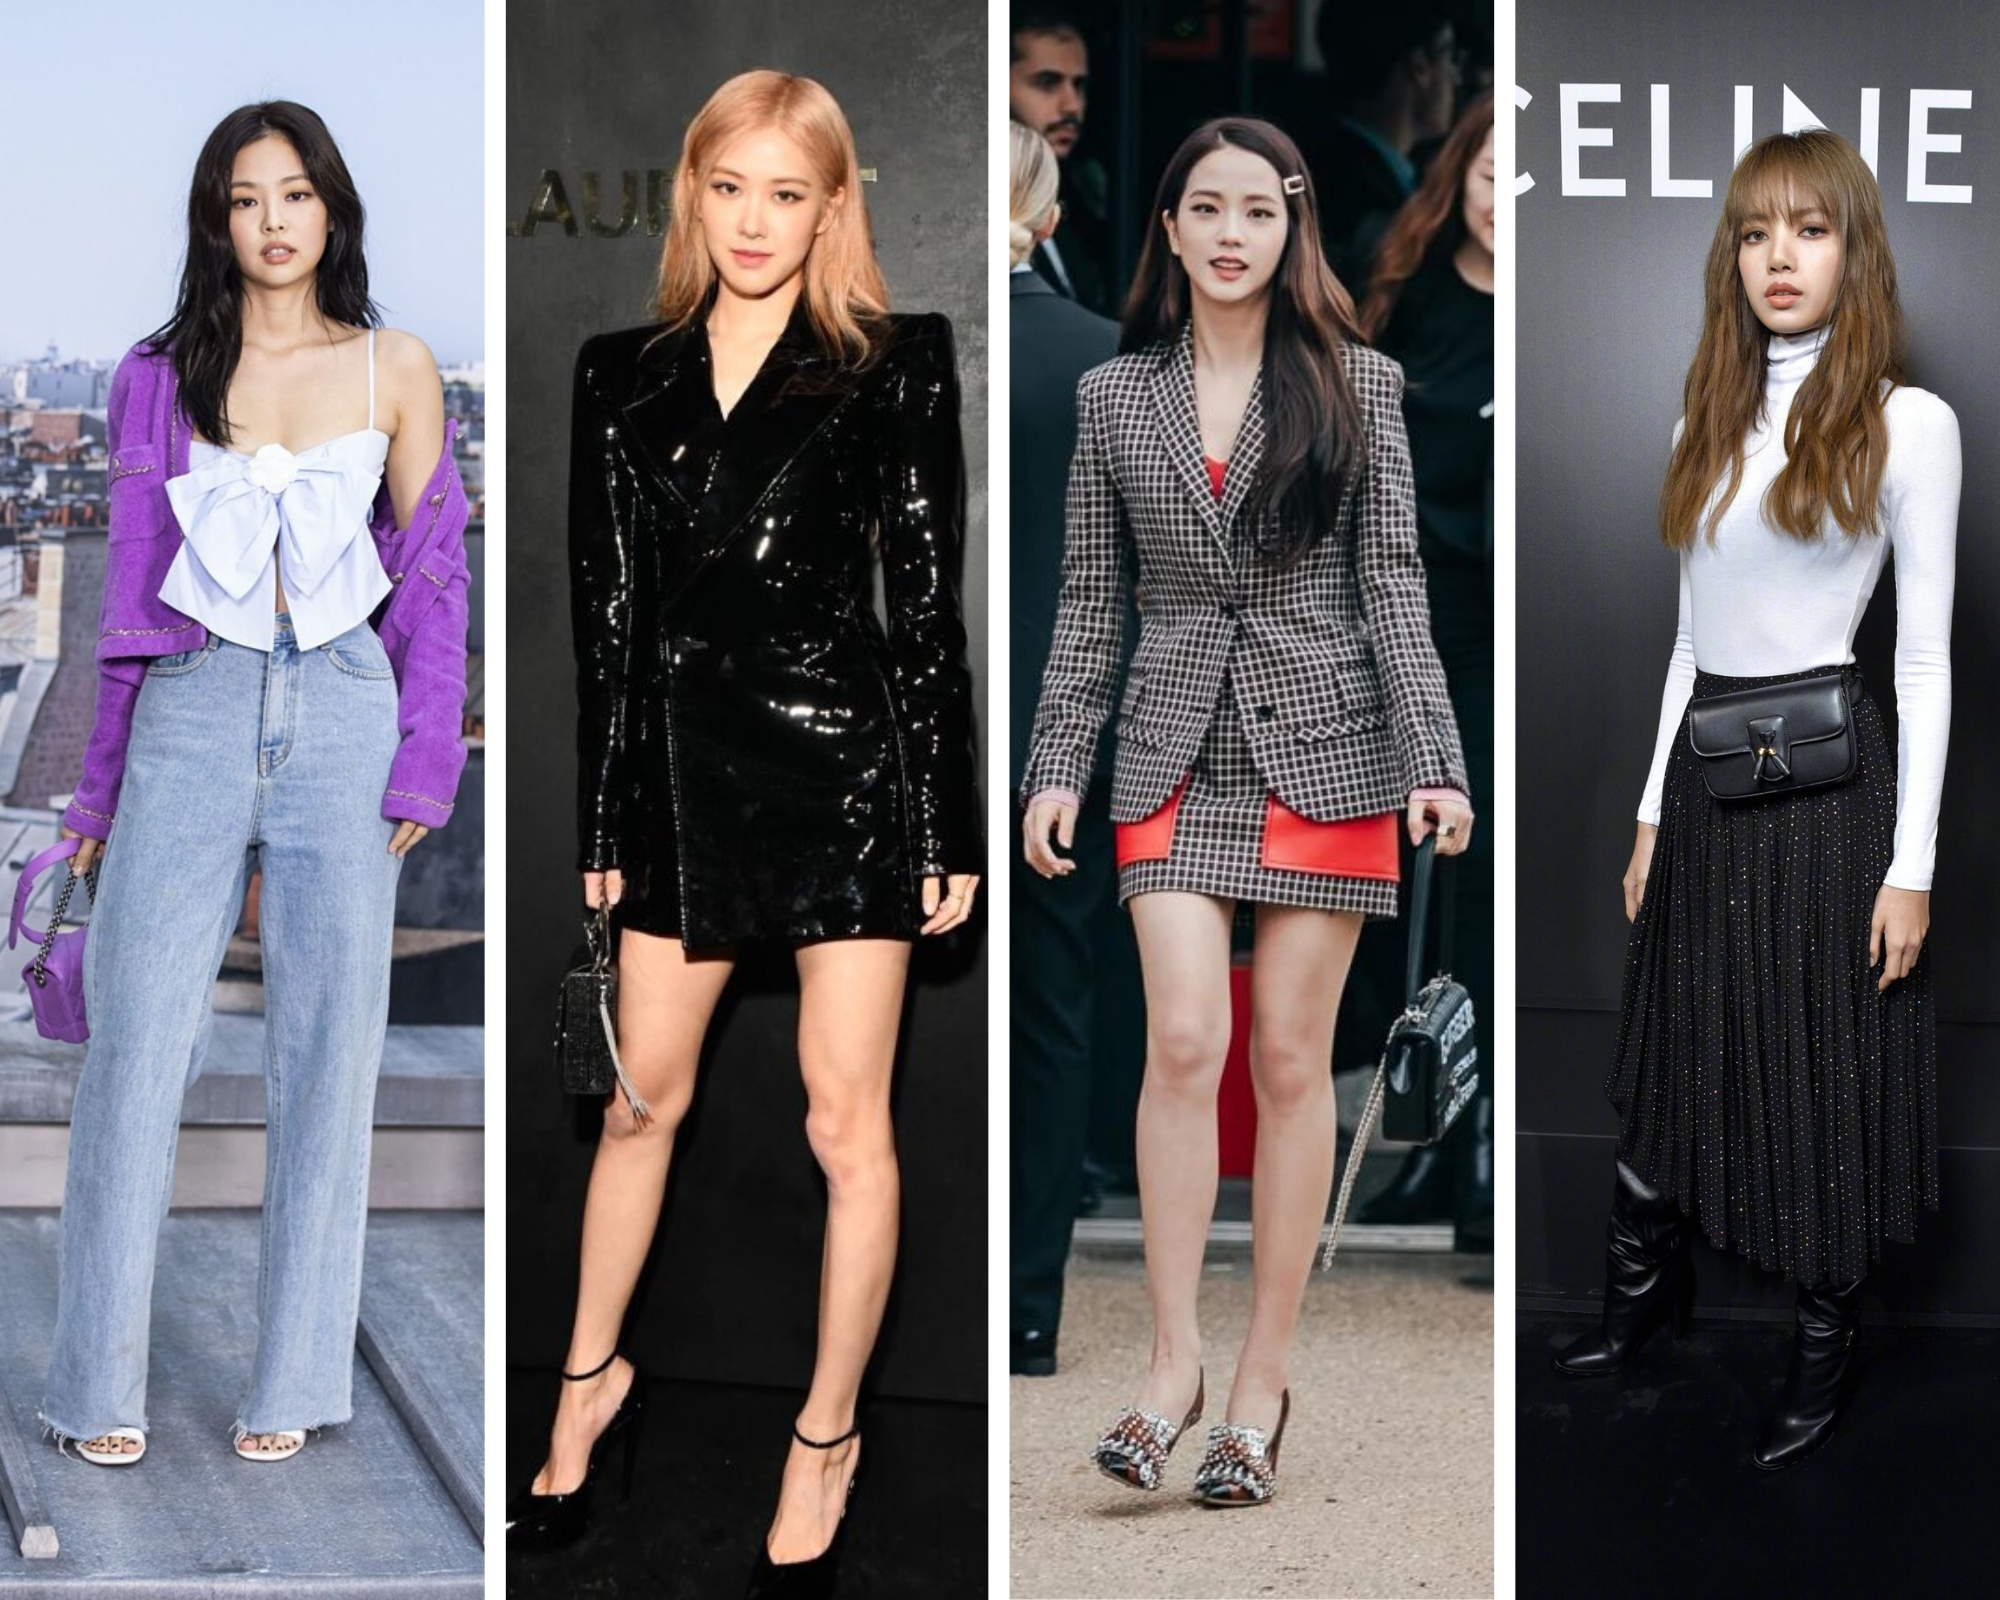 Amazing Look Collection of Blackpink Fashion Week in 2019 - K-POP Post -  South Korea's Leading K-pop Media Publication